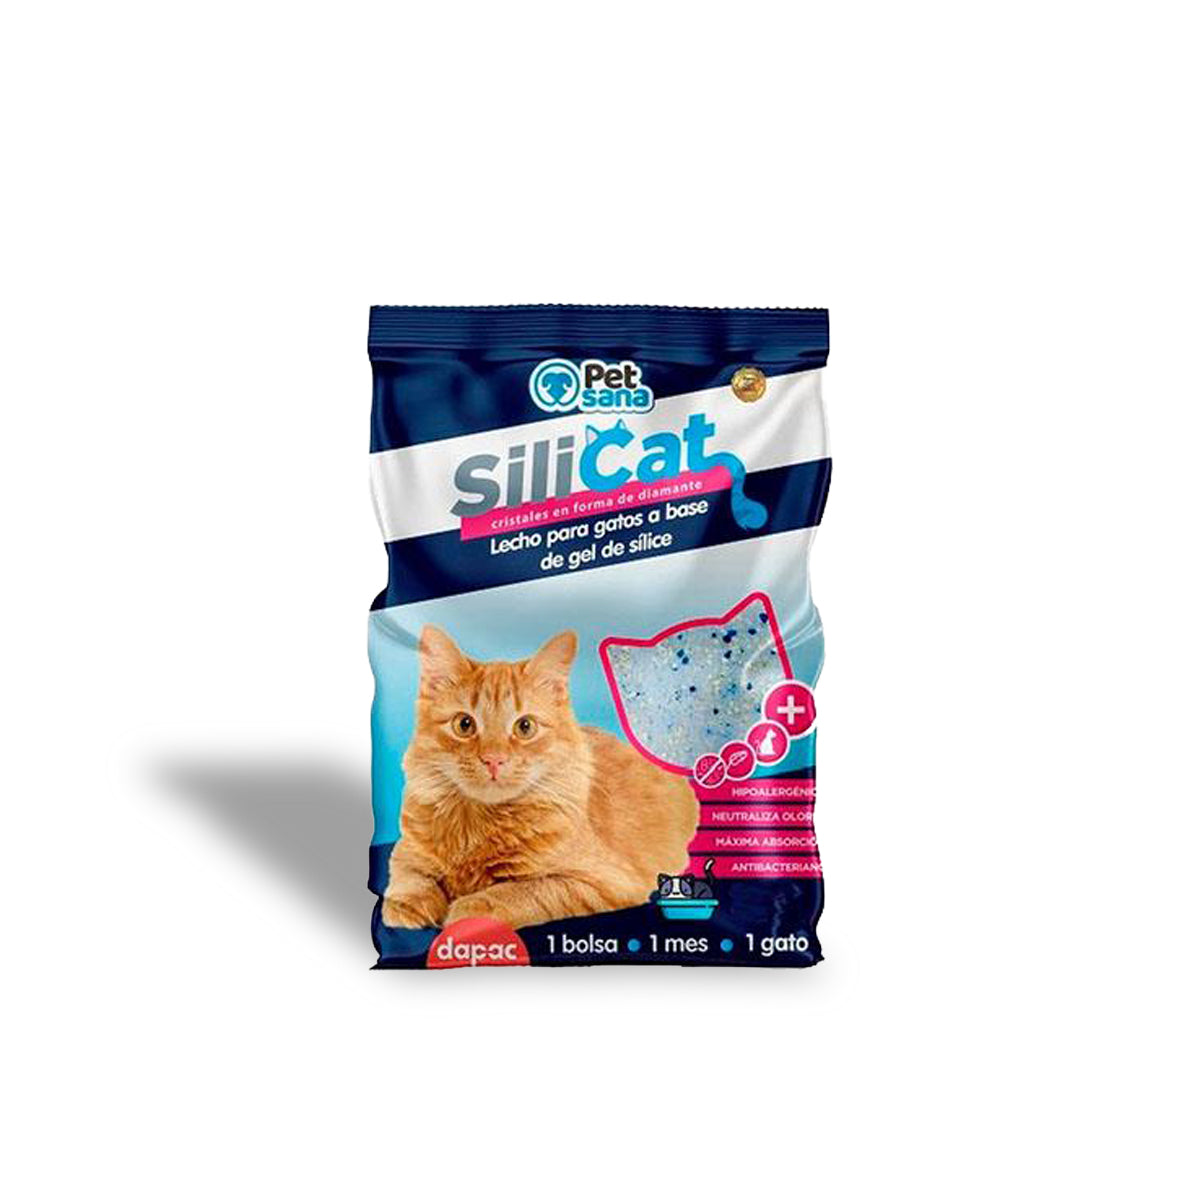 PetSana gel de silice arena para gatos